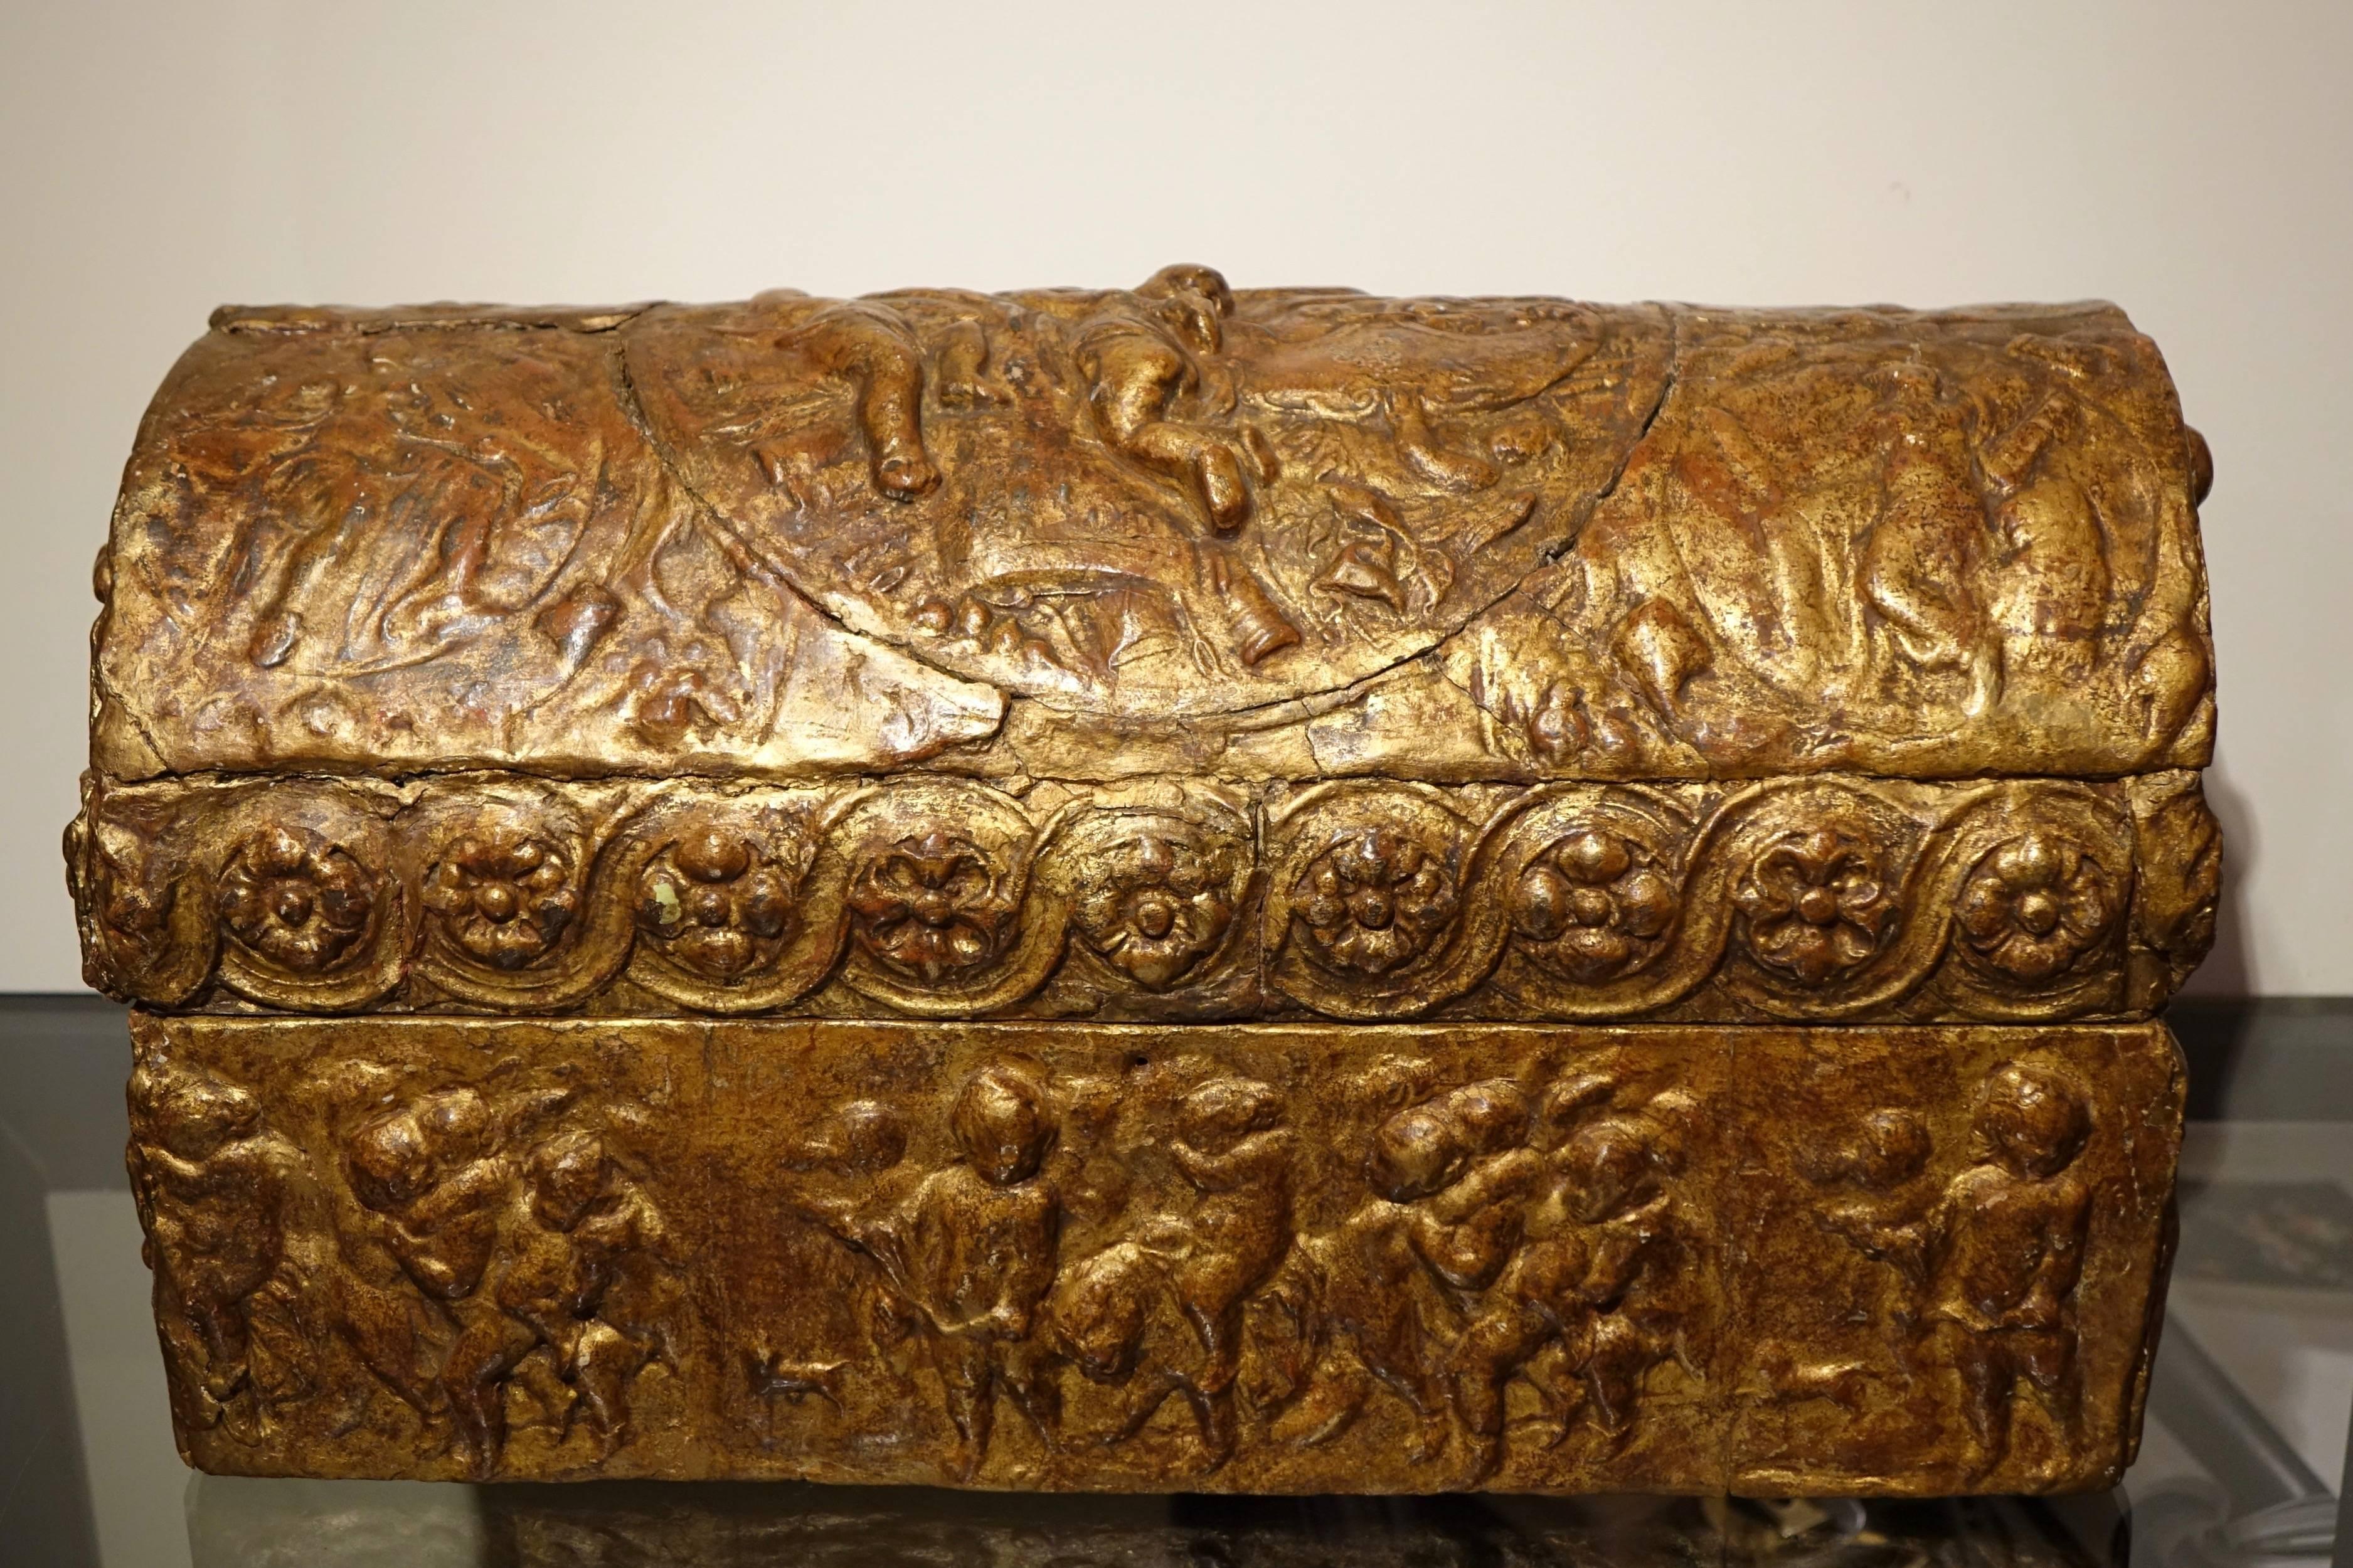 Rare Renaissance poplar wood casket with a Pastiglia decor, Sienna, mid-15th century
Pastiglia is an Italian term meaning 